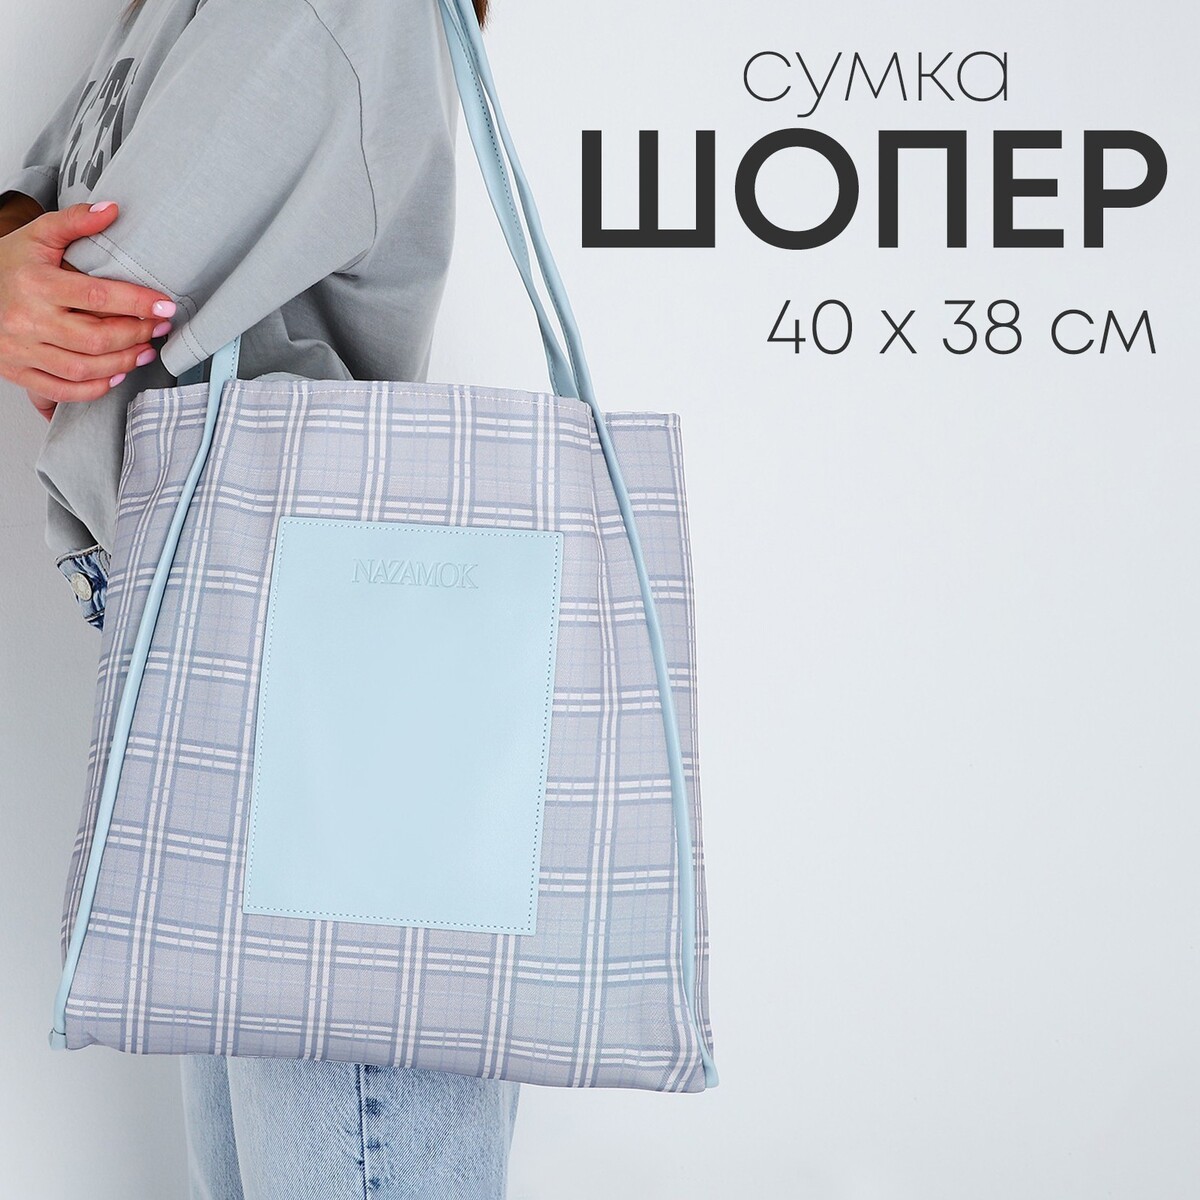 Сумка - шопер с нашивкой nazamok серый, 40×38×7 см сумка шопер на молнии серый